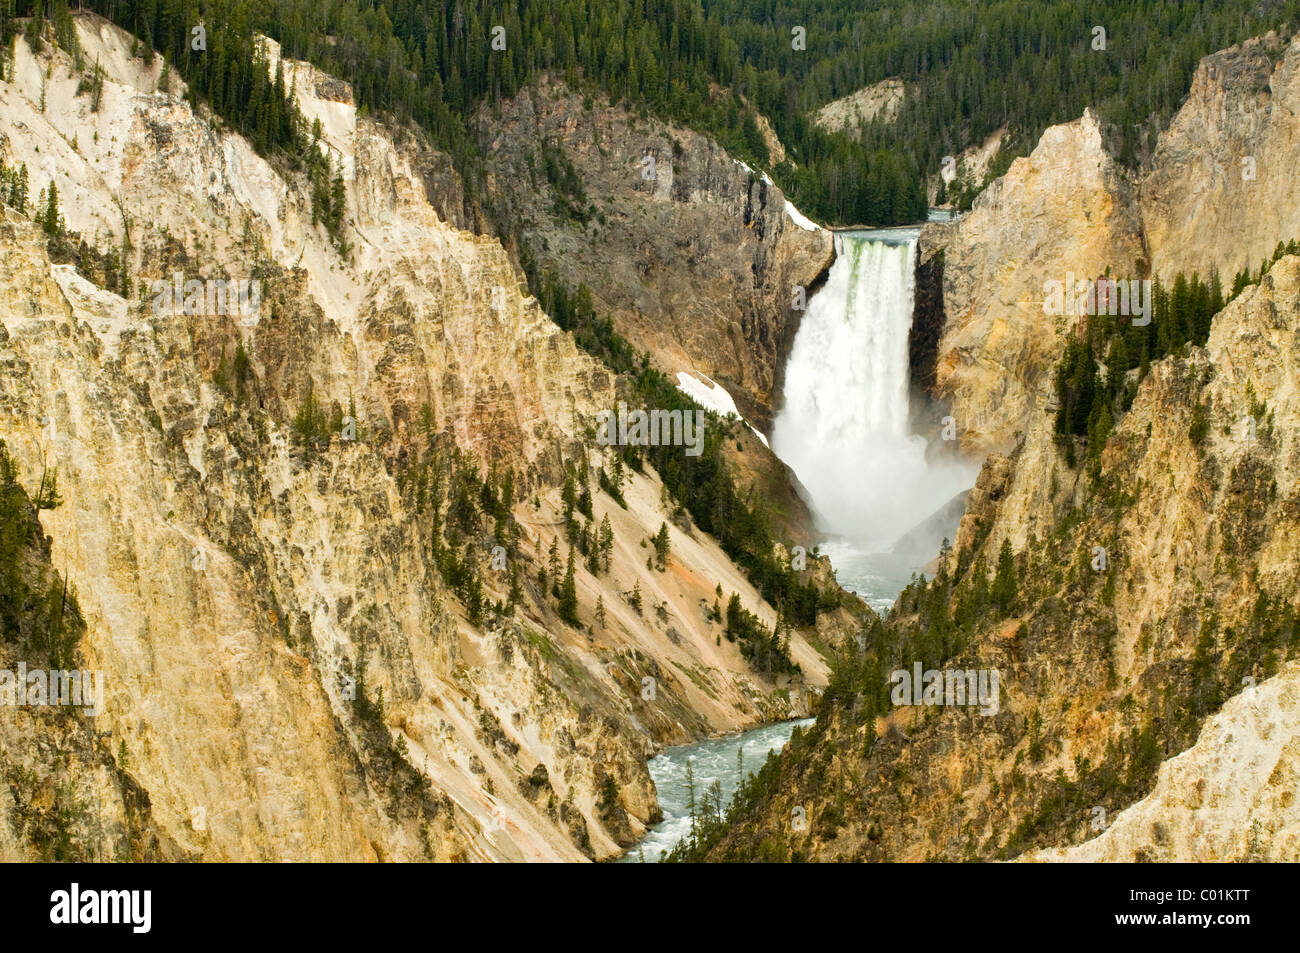 Lower Falls of the Yellowstone River, Grand Canyon Of The Yellowstone, Yellowstone National Park, Wyoming, USA, North America Stock Photo